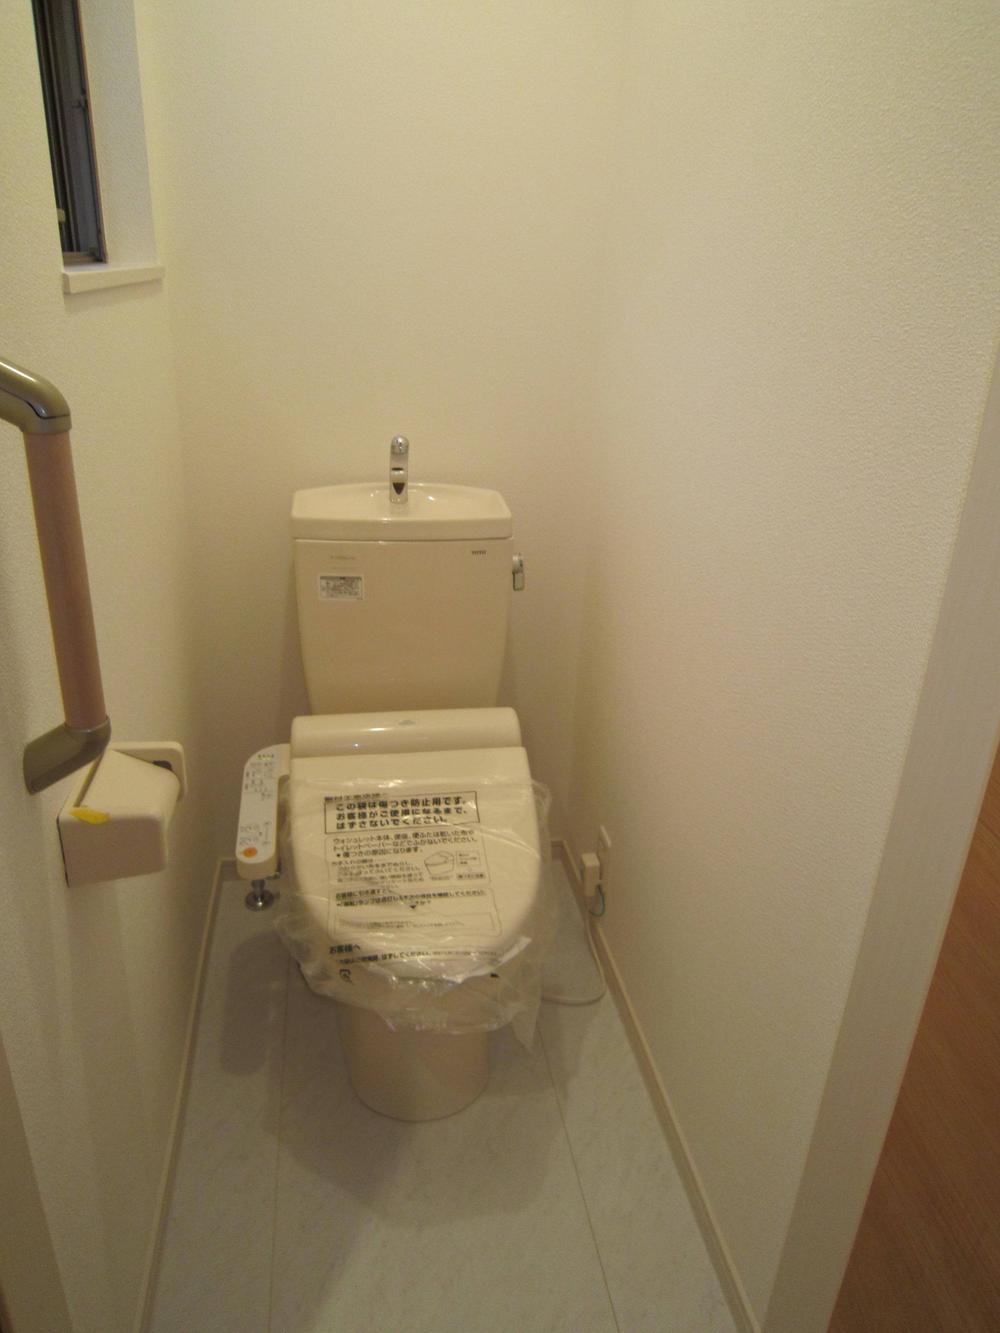 Toilet. Toilet specification example